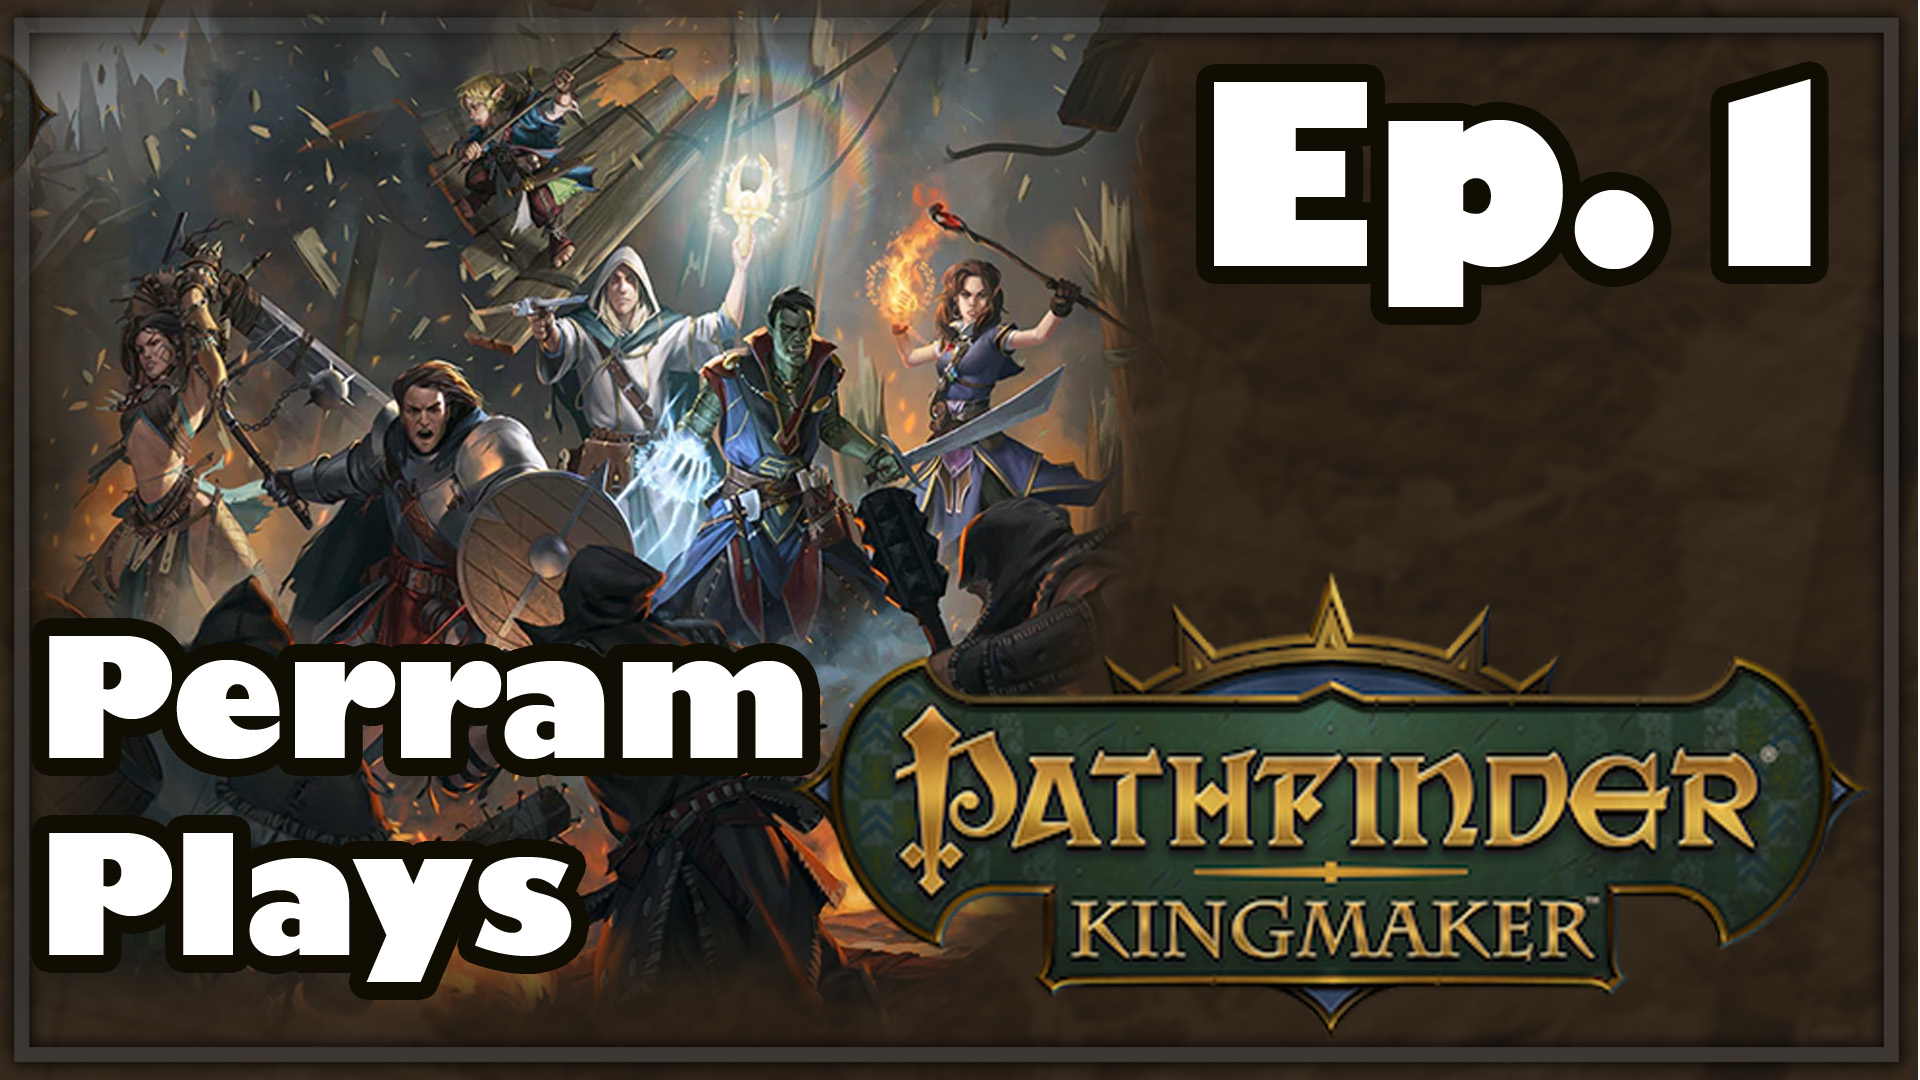 Perram Plays Pathfinder: Kingmaker Episode 1